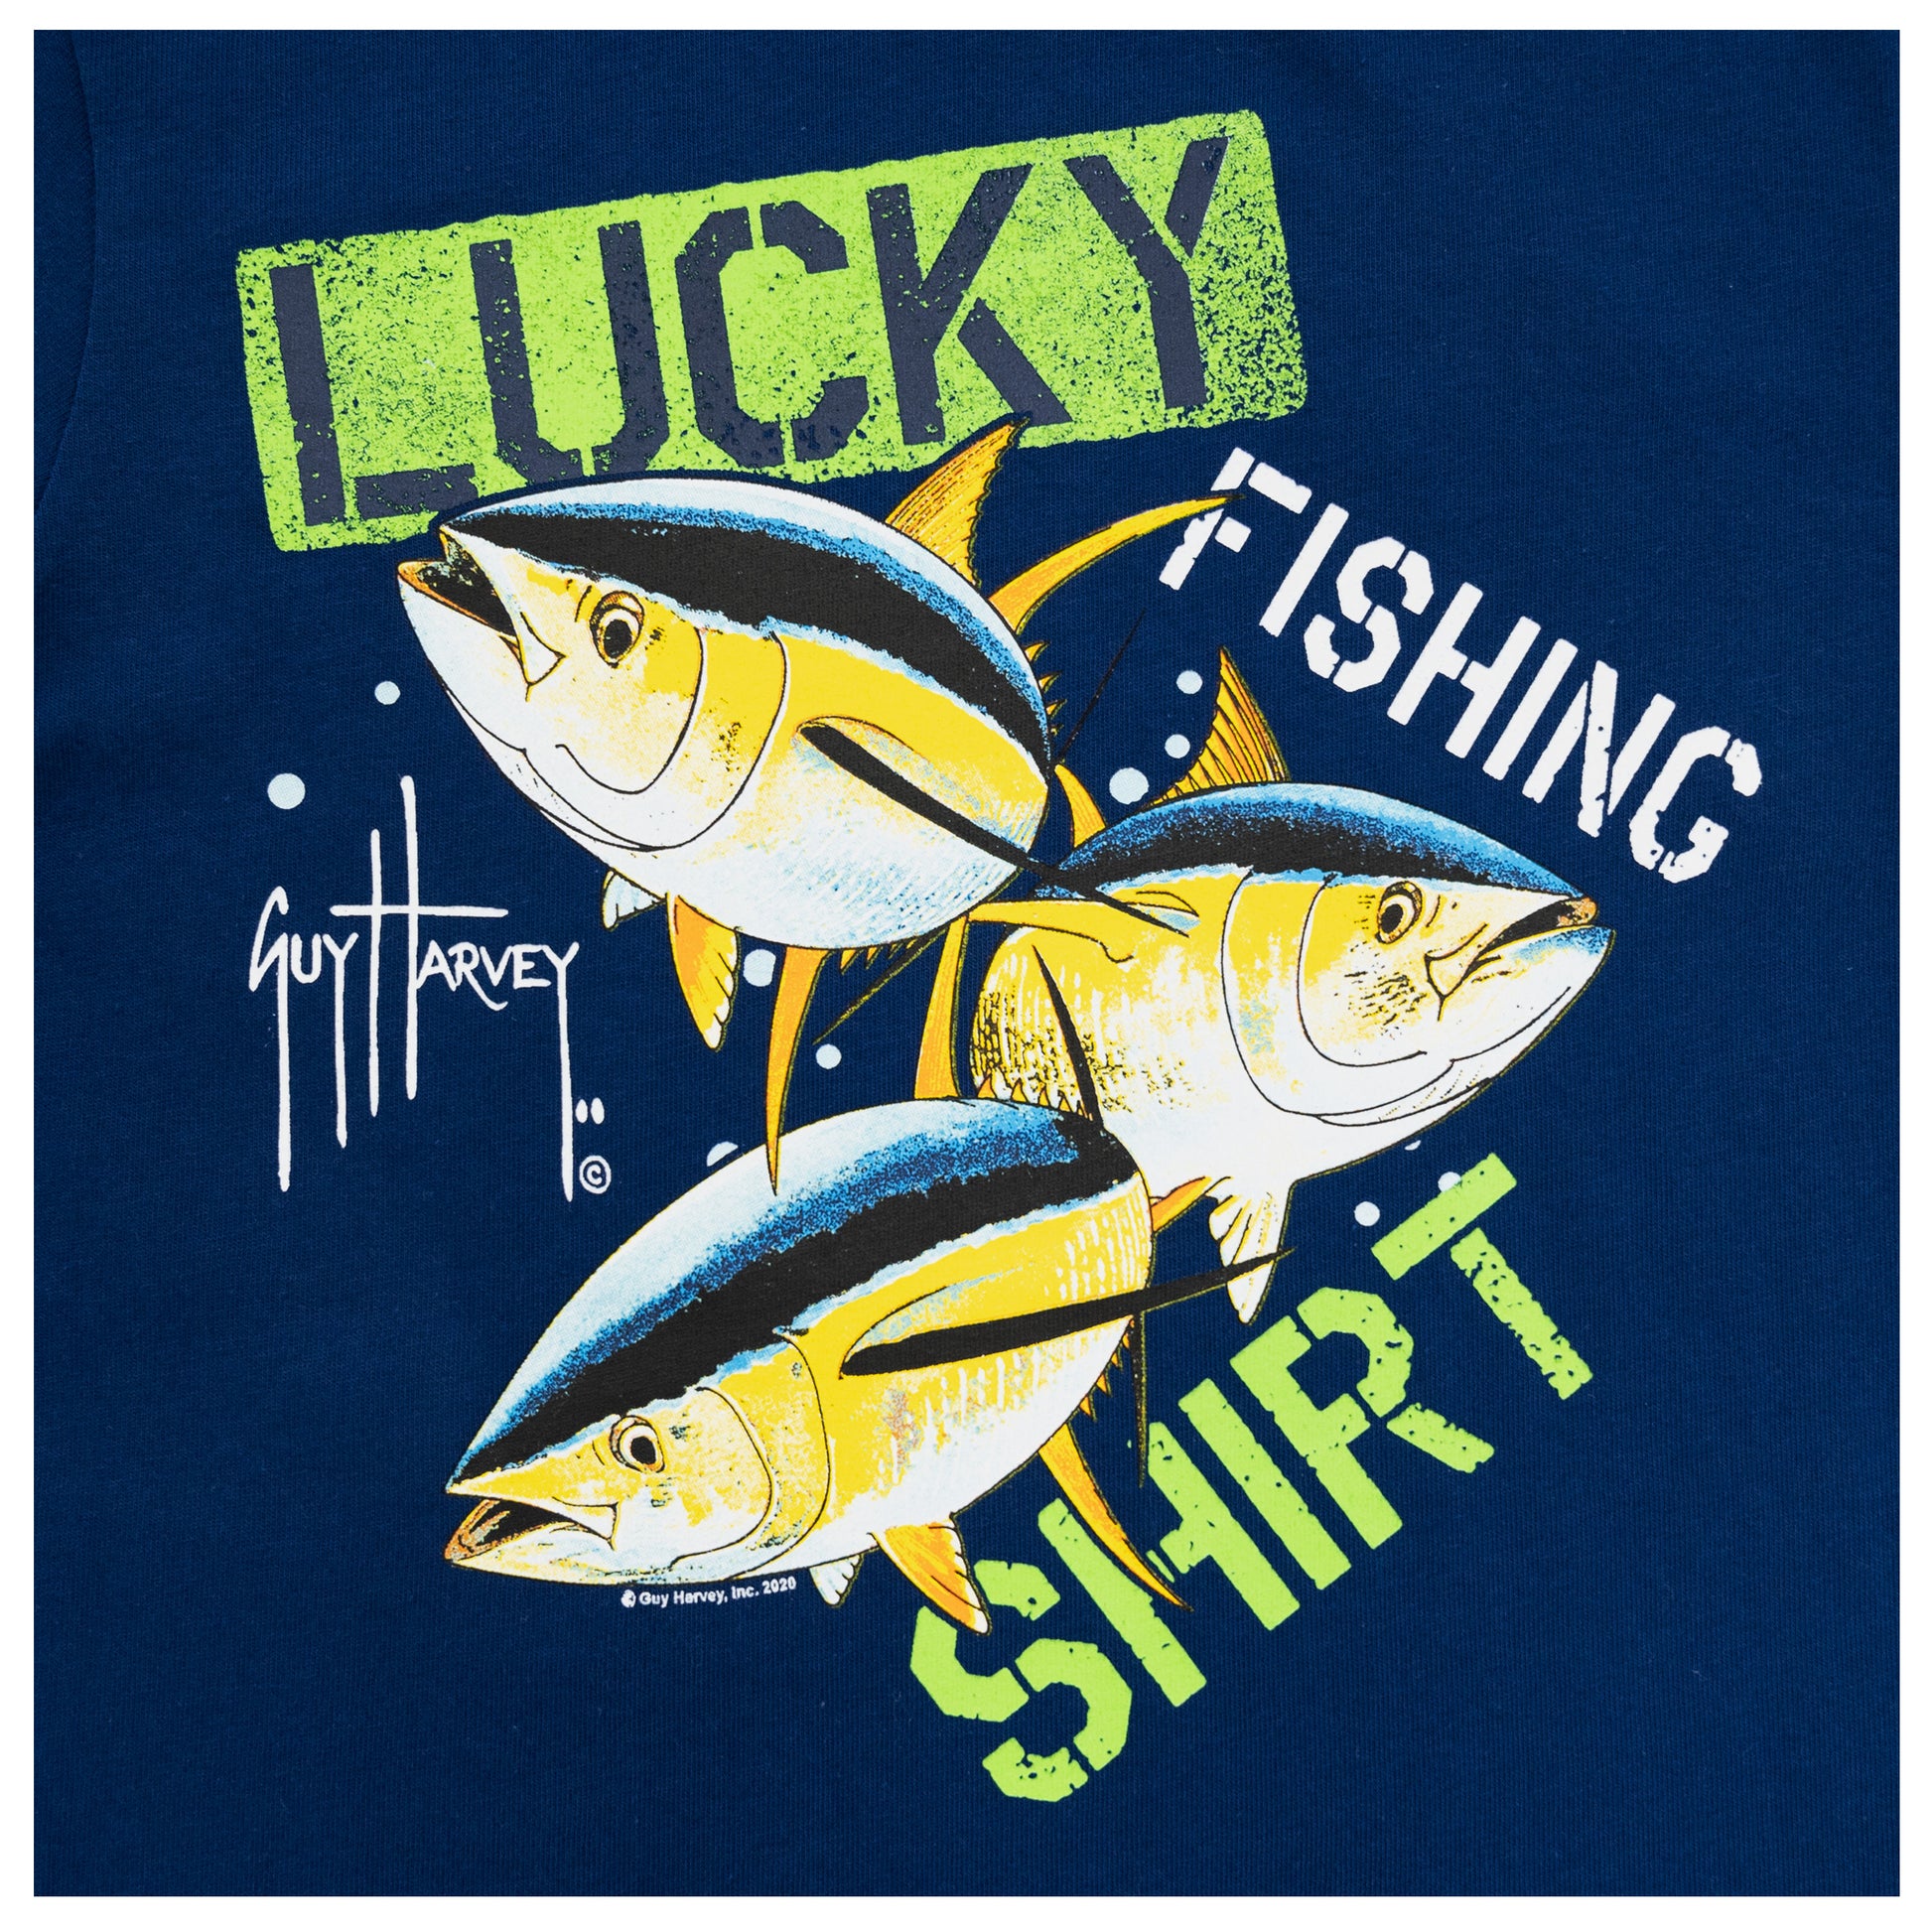 Kids Lucky Fishing Short Sleeve T-Shirt – Guy Harvey